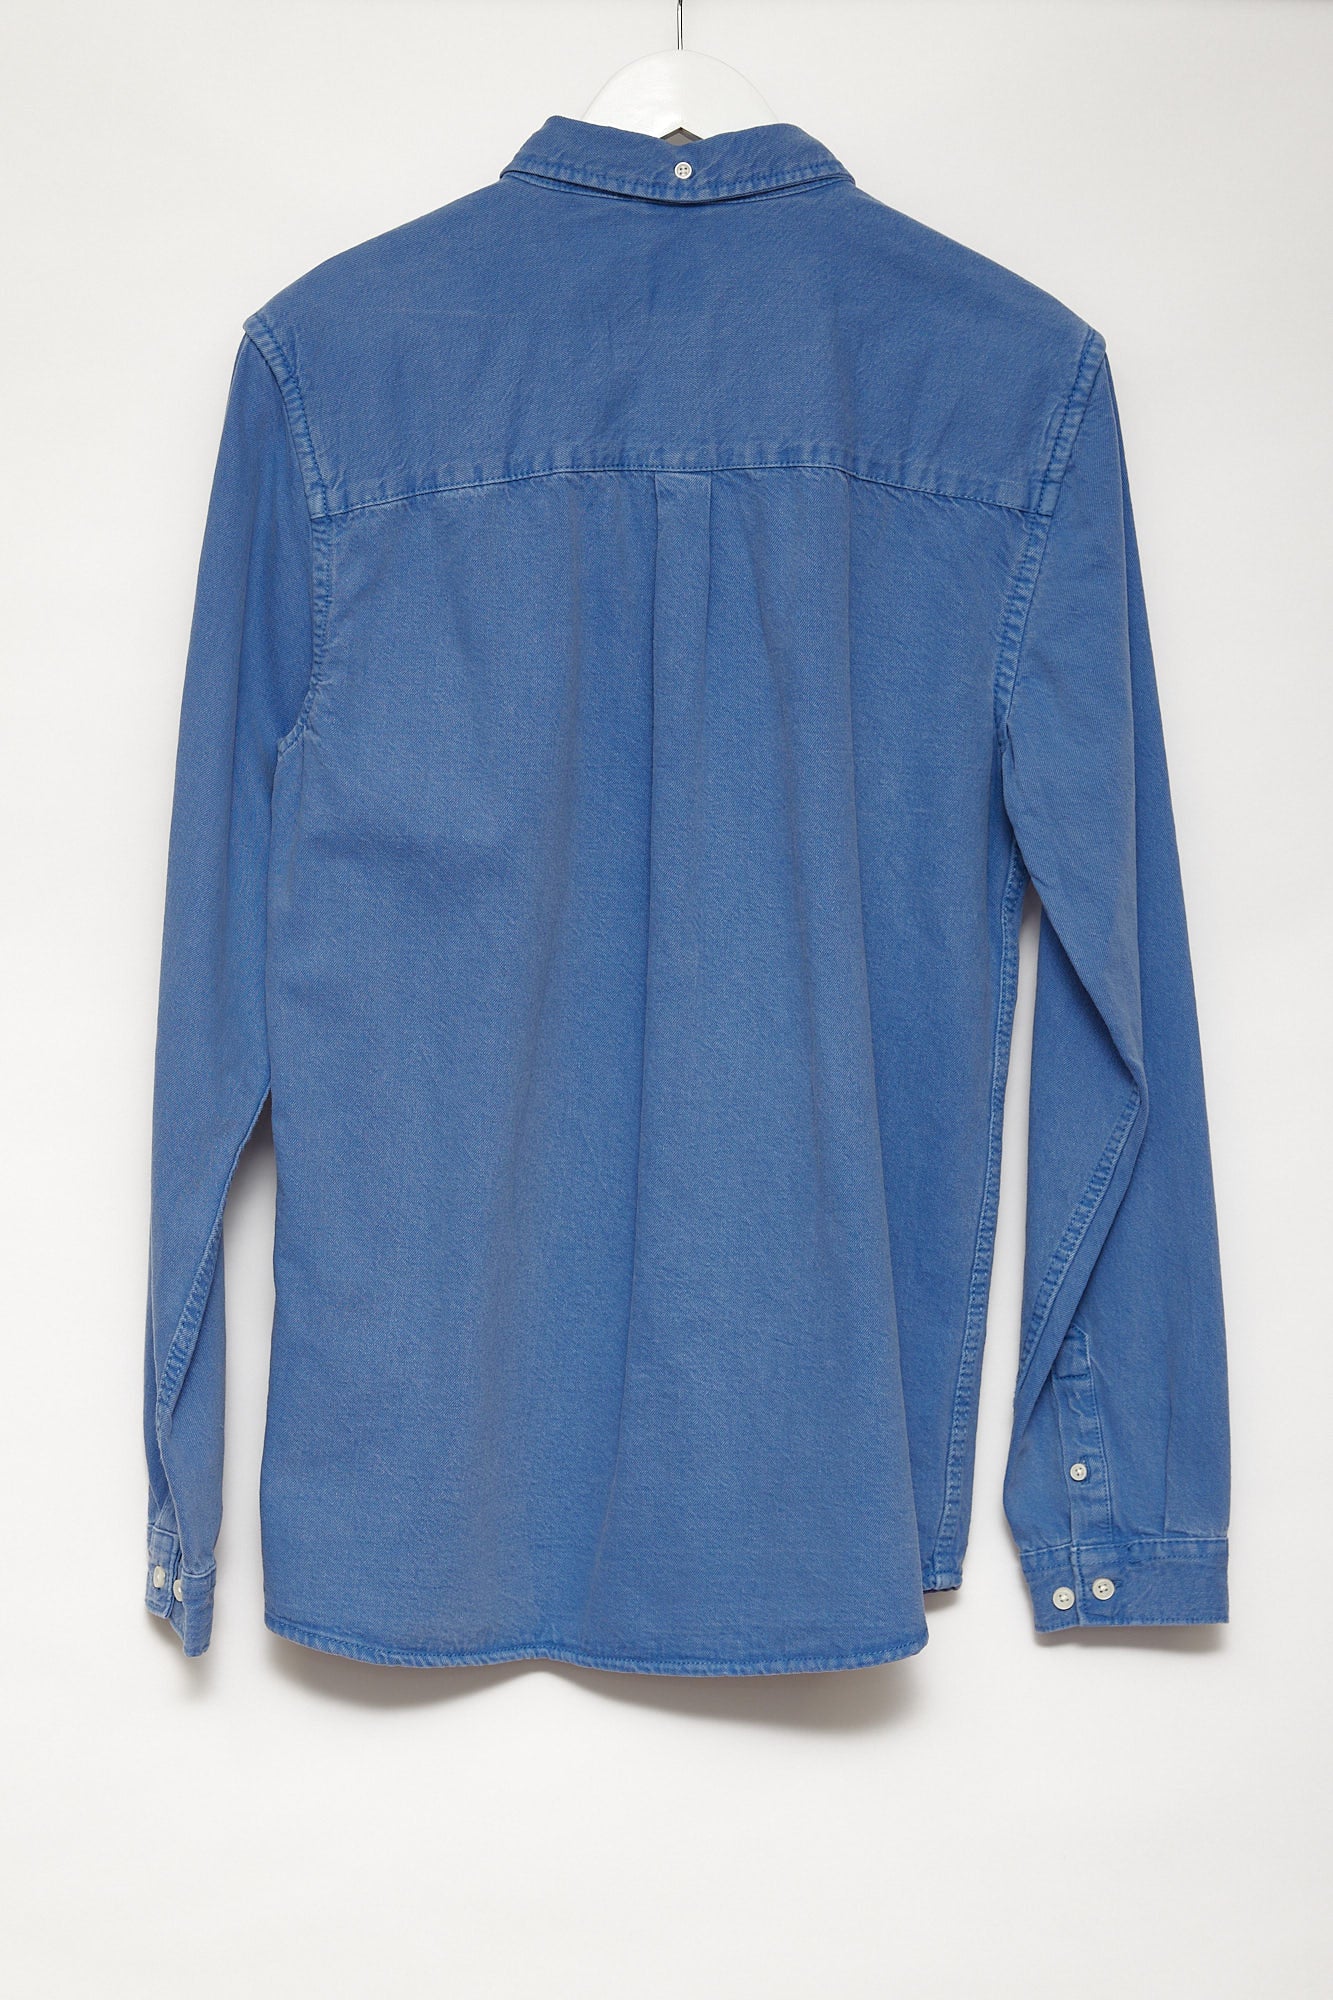 Mens Zara Blue Denim Oxford shirt size medium